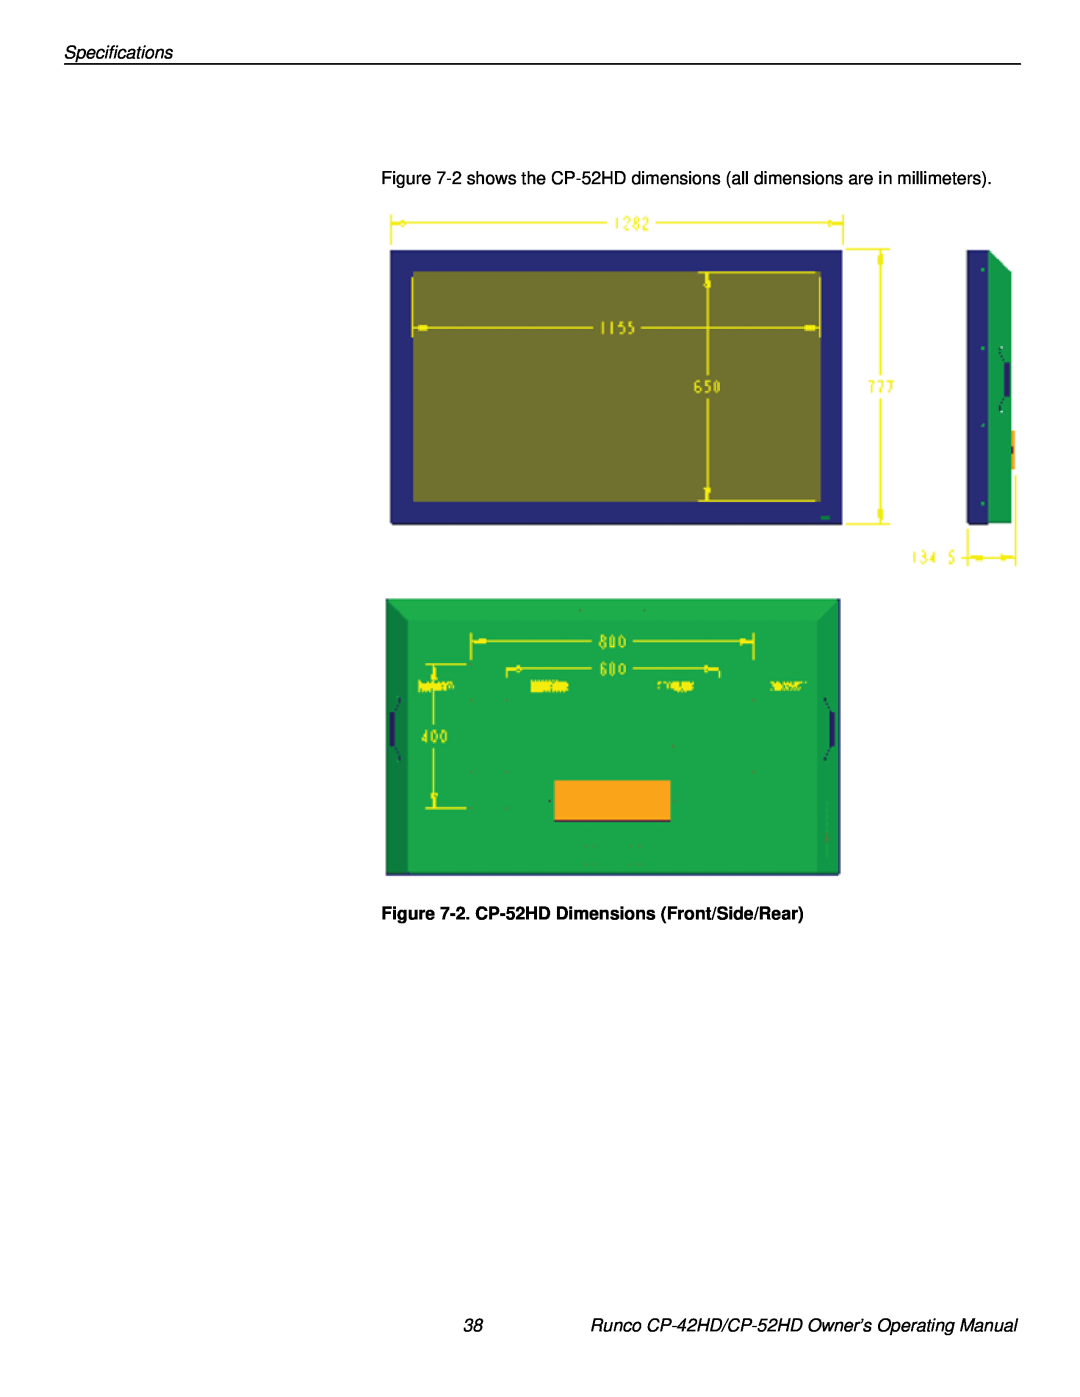 Runco CP-42HD manual 2. CP-52HD Dimensions Front/Side/Rear 